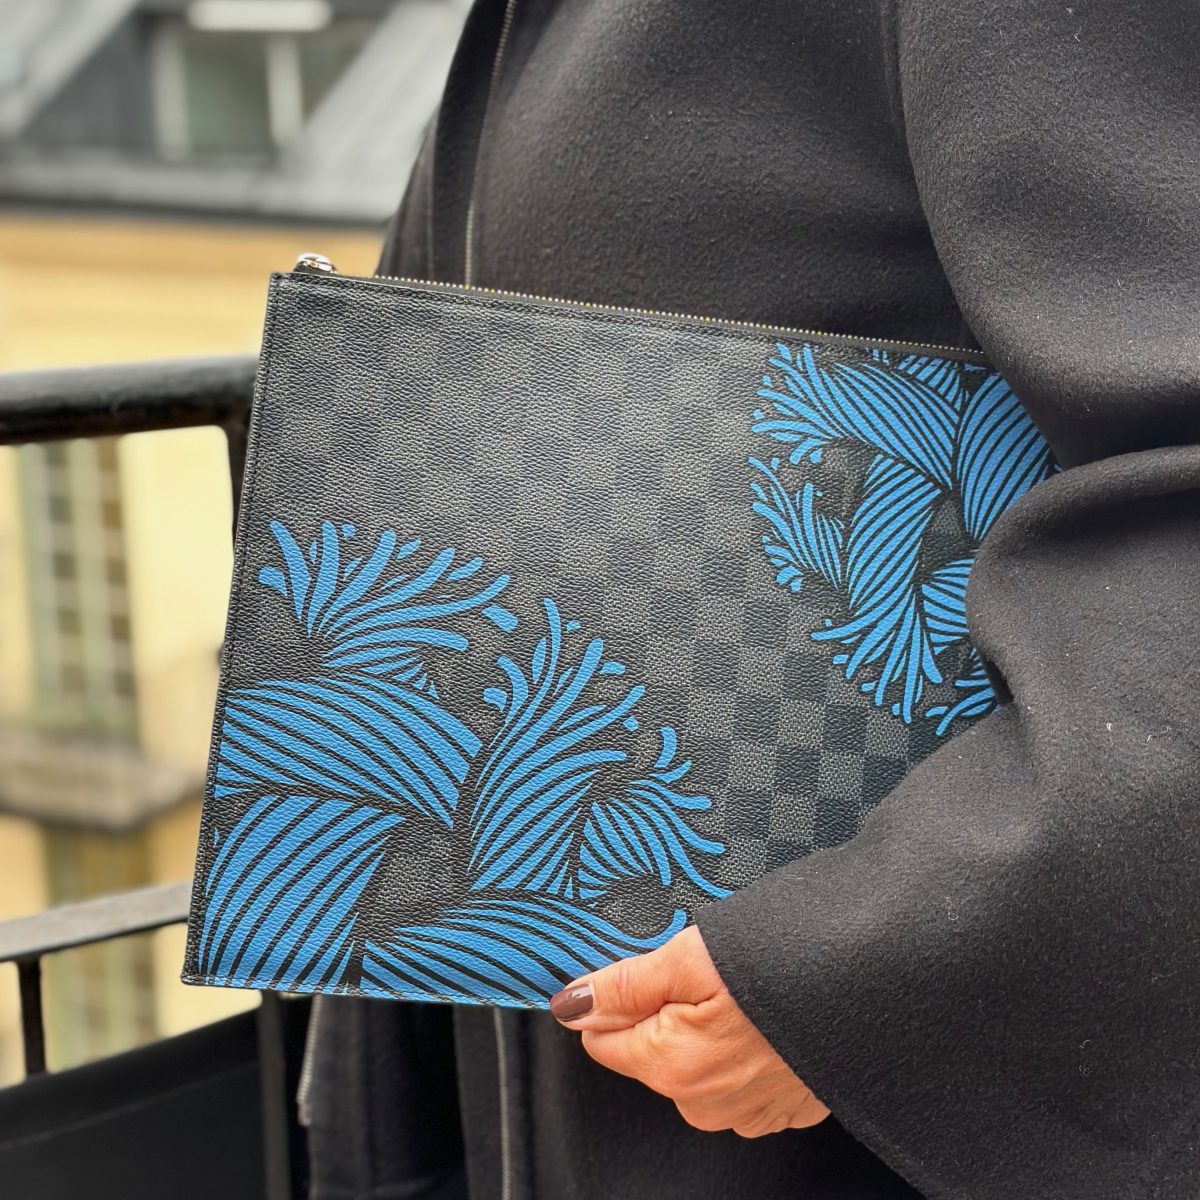 Louis Vuitton designer bags